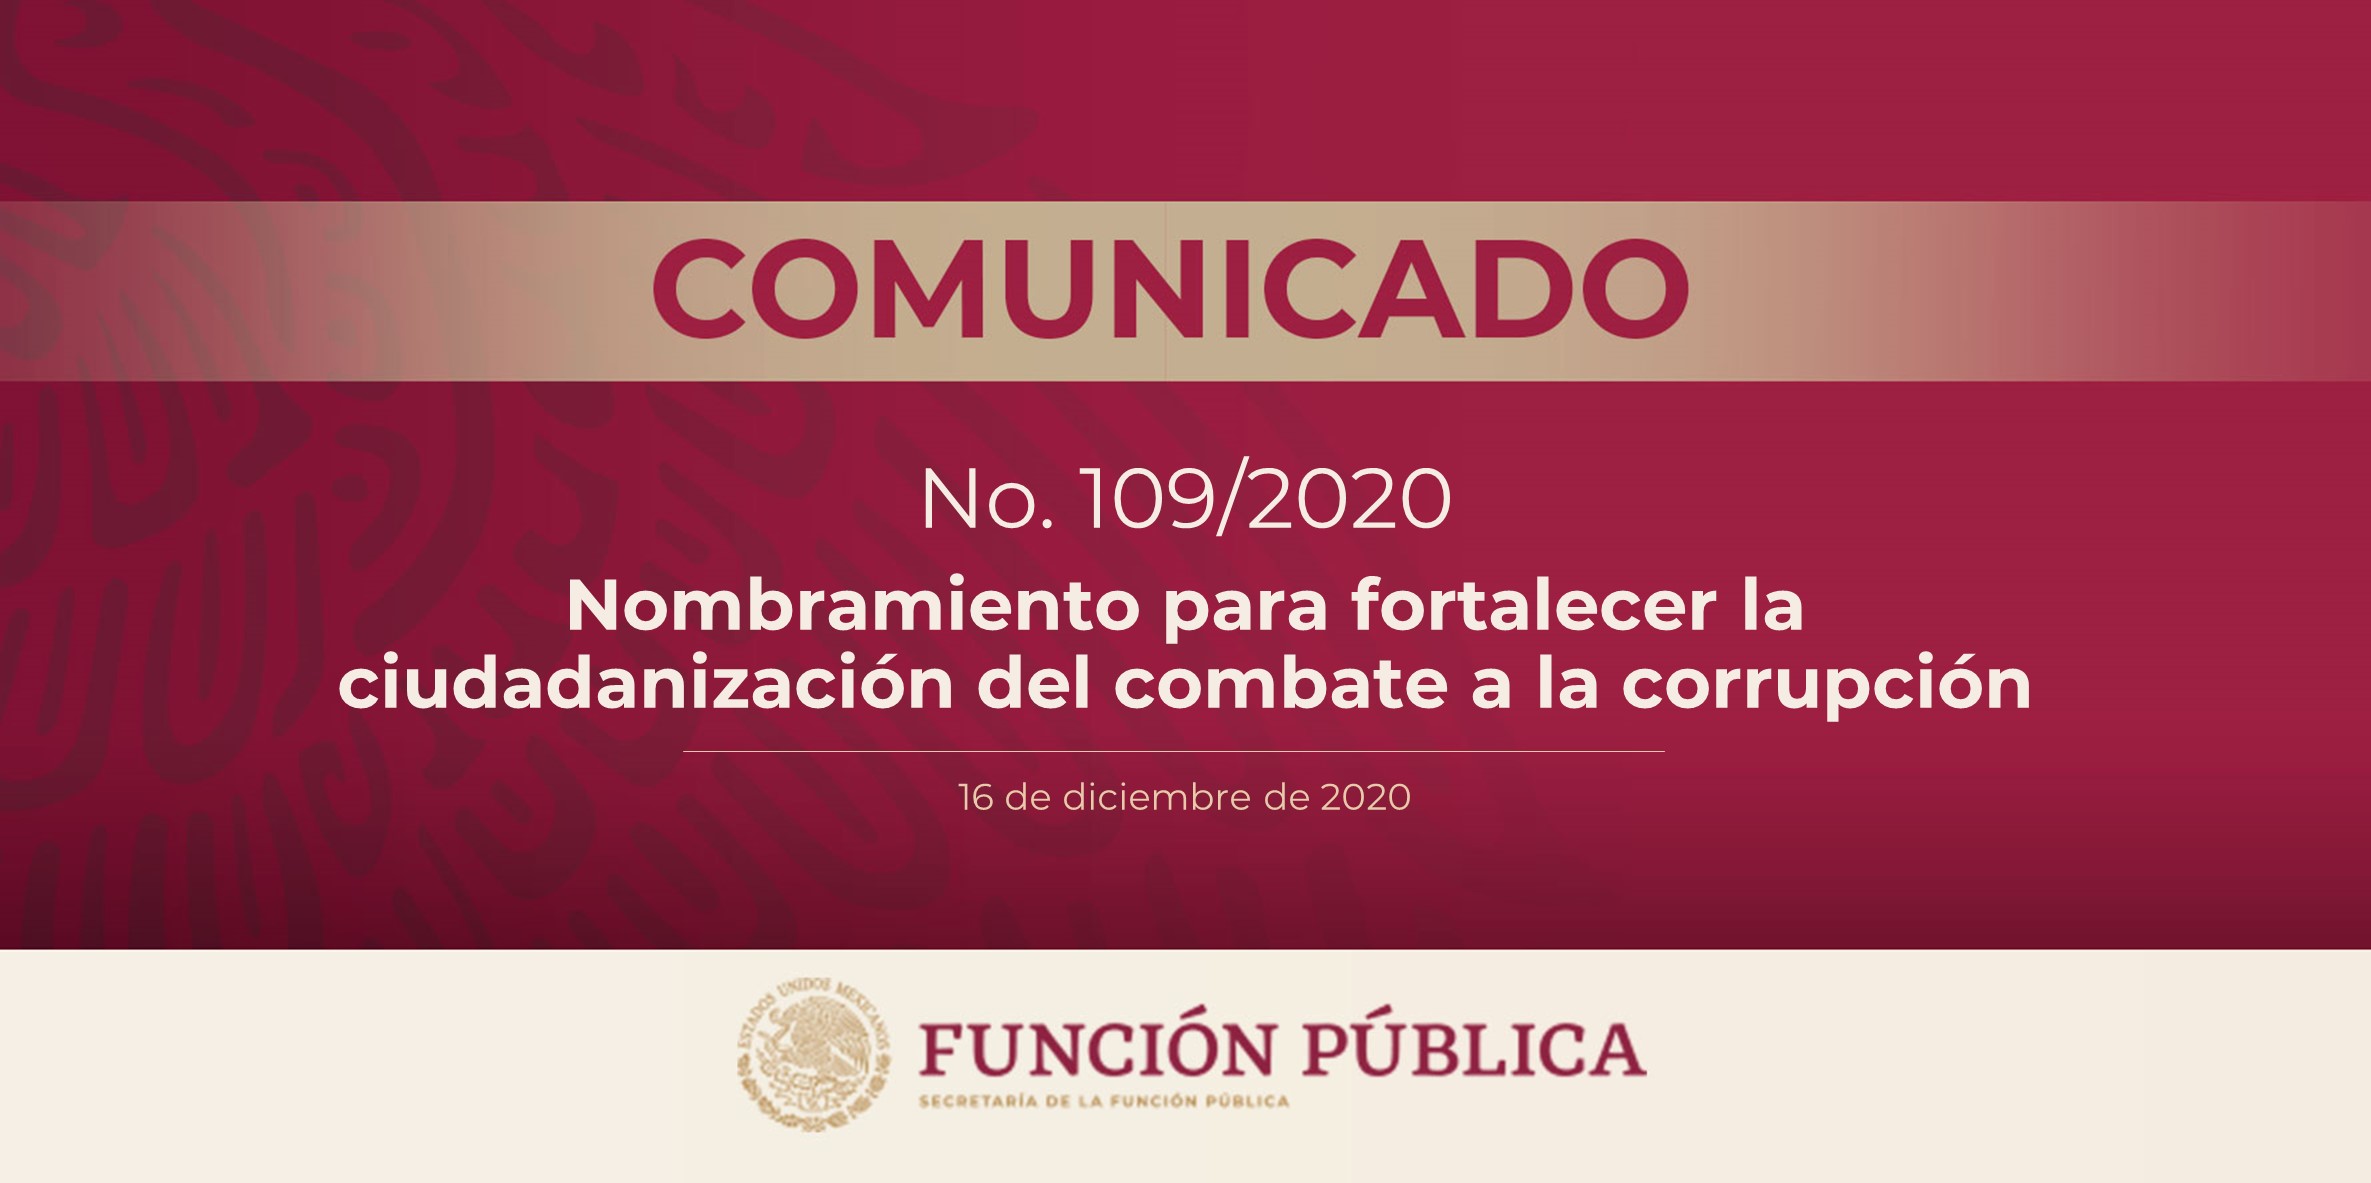 /cms/uploads/image/file/622569/Banner_comunicado_ciudadanizaci_n.jpg